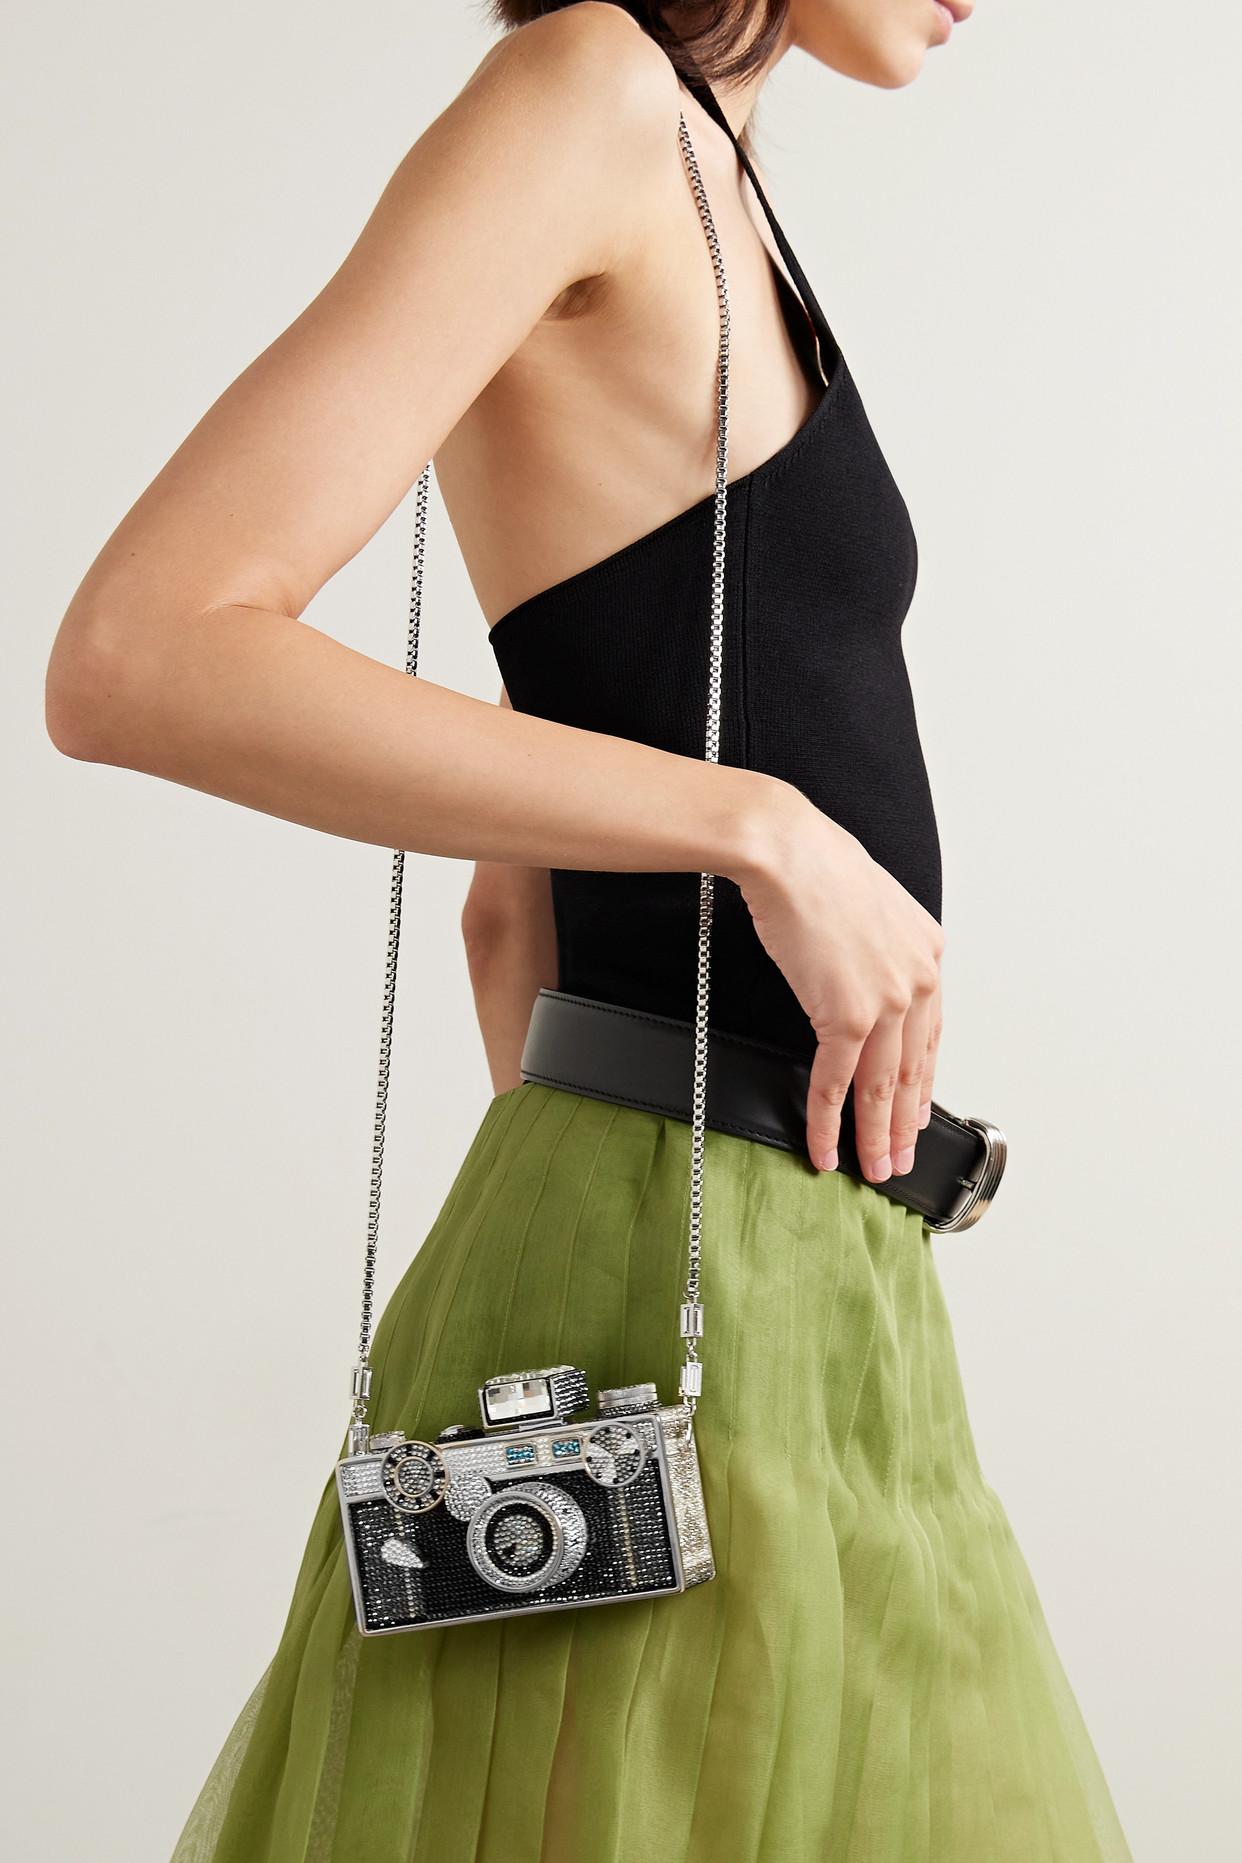 Judith Leiber Camera Clutch Bag